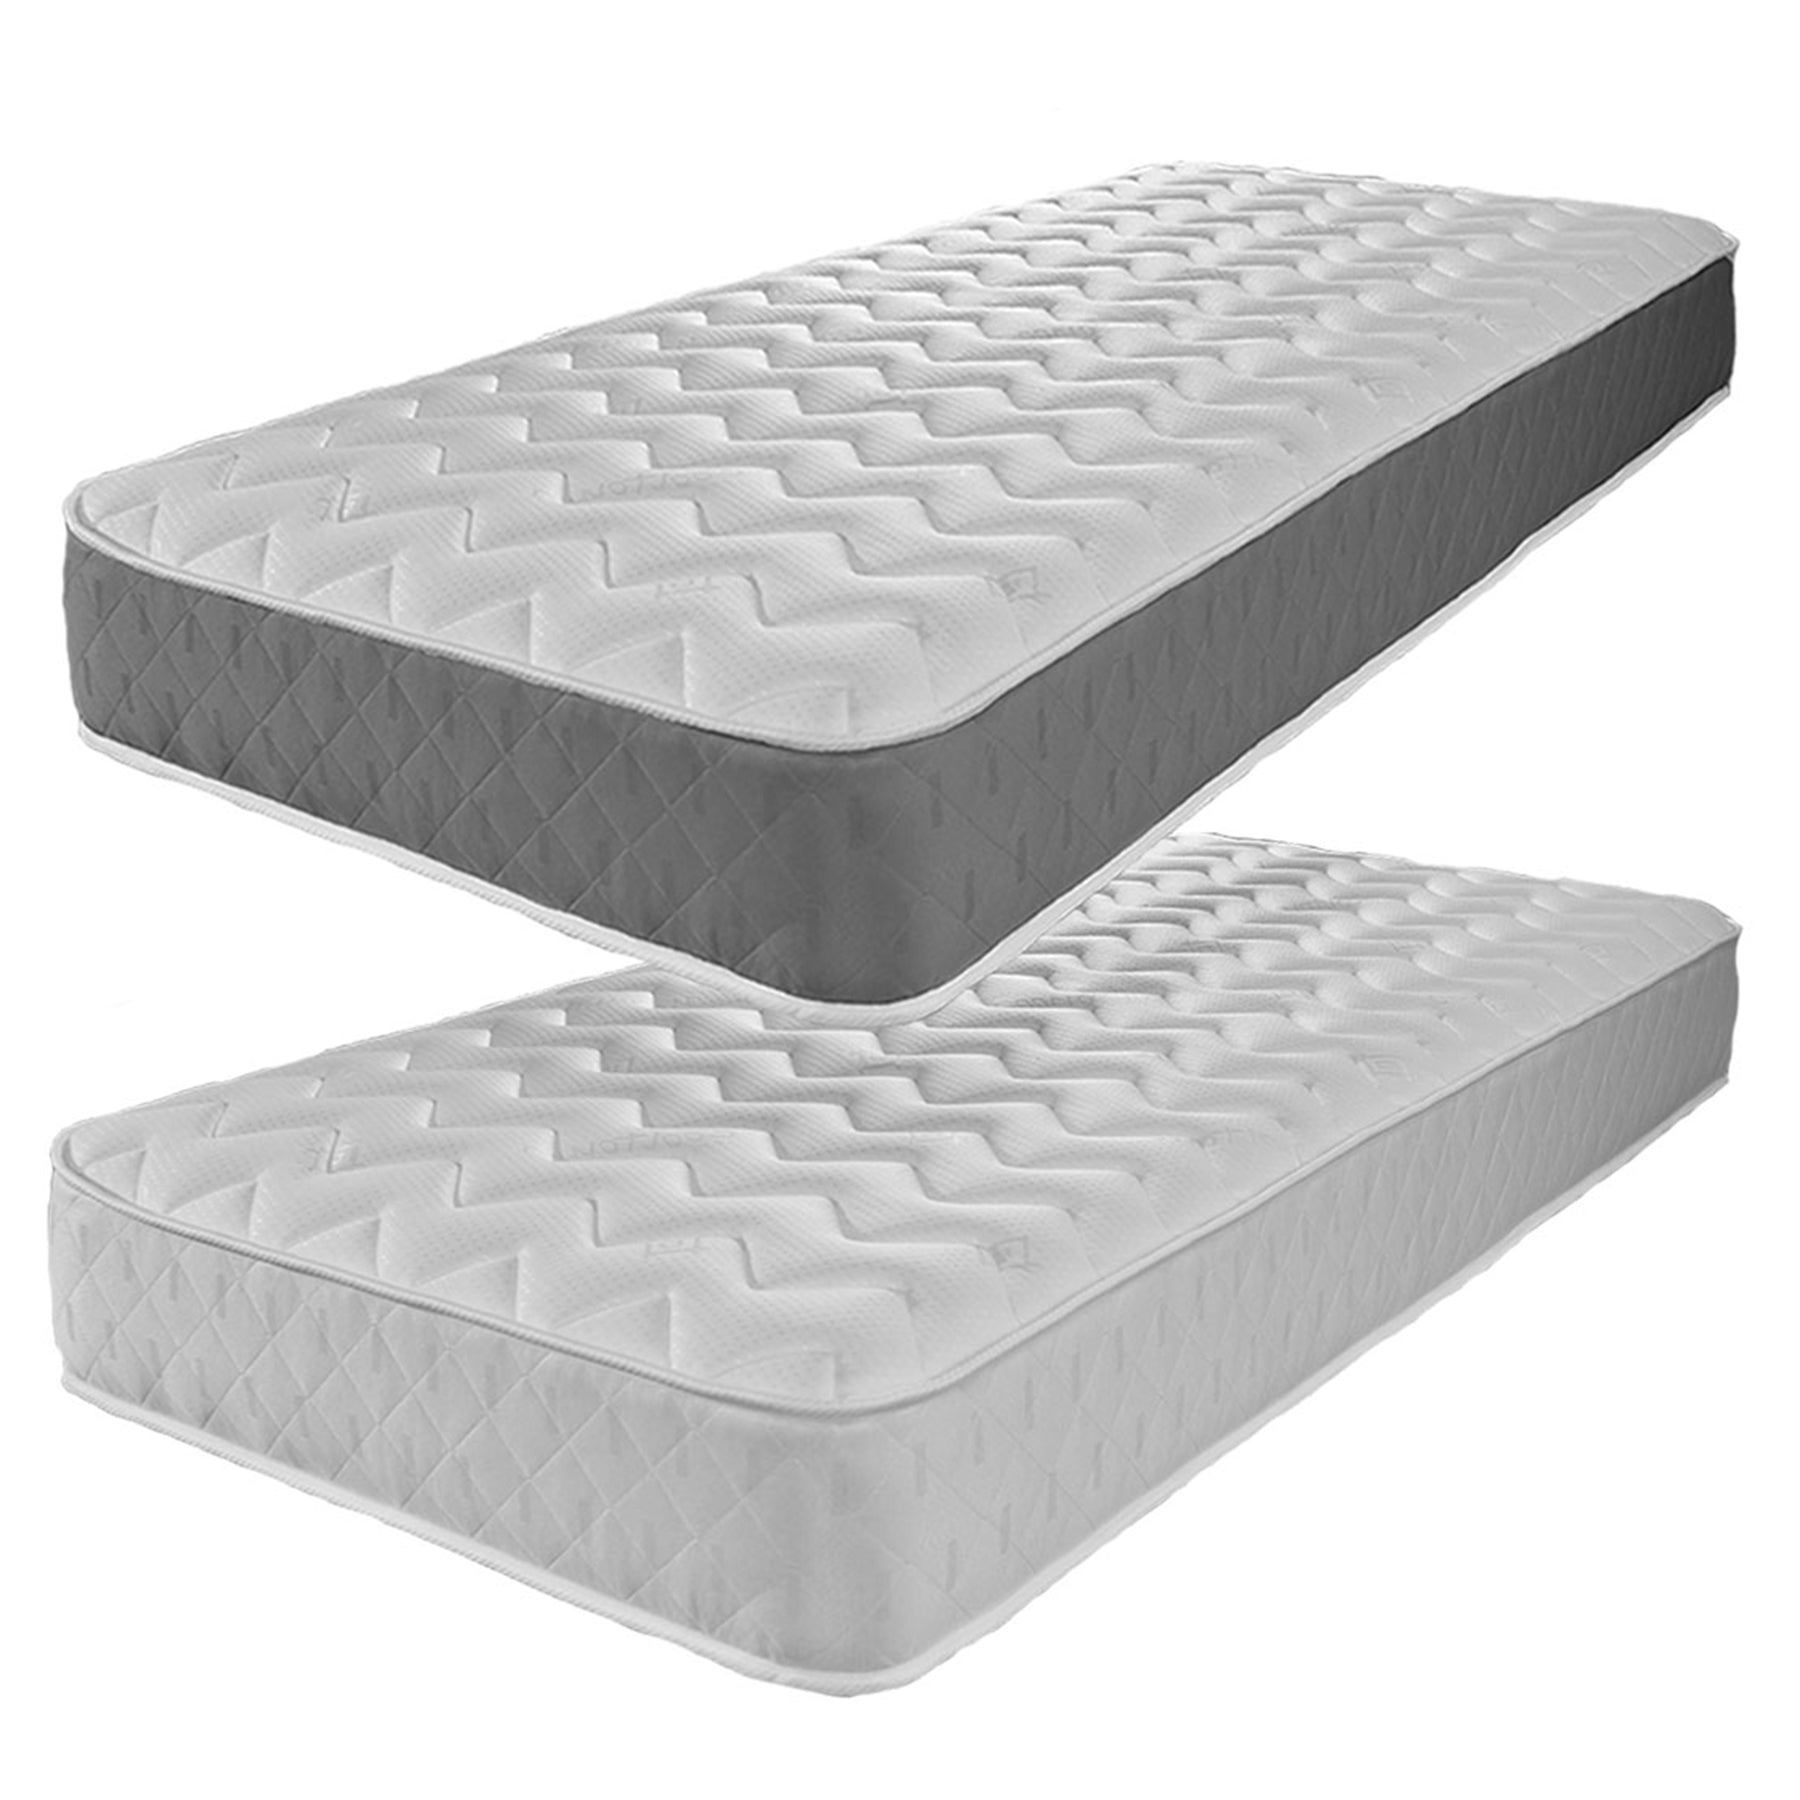 Starlight Beds 7.5" Deep Multi-Layer Memory foam and Open-Coil Spring Mattress